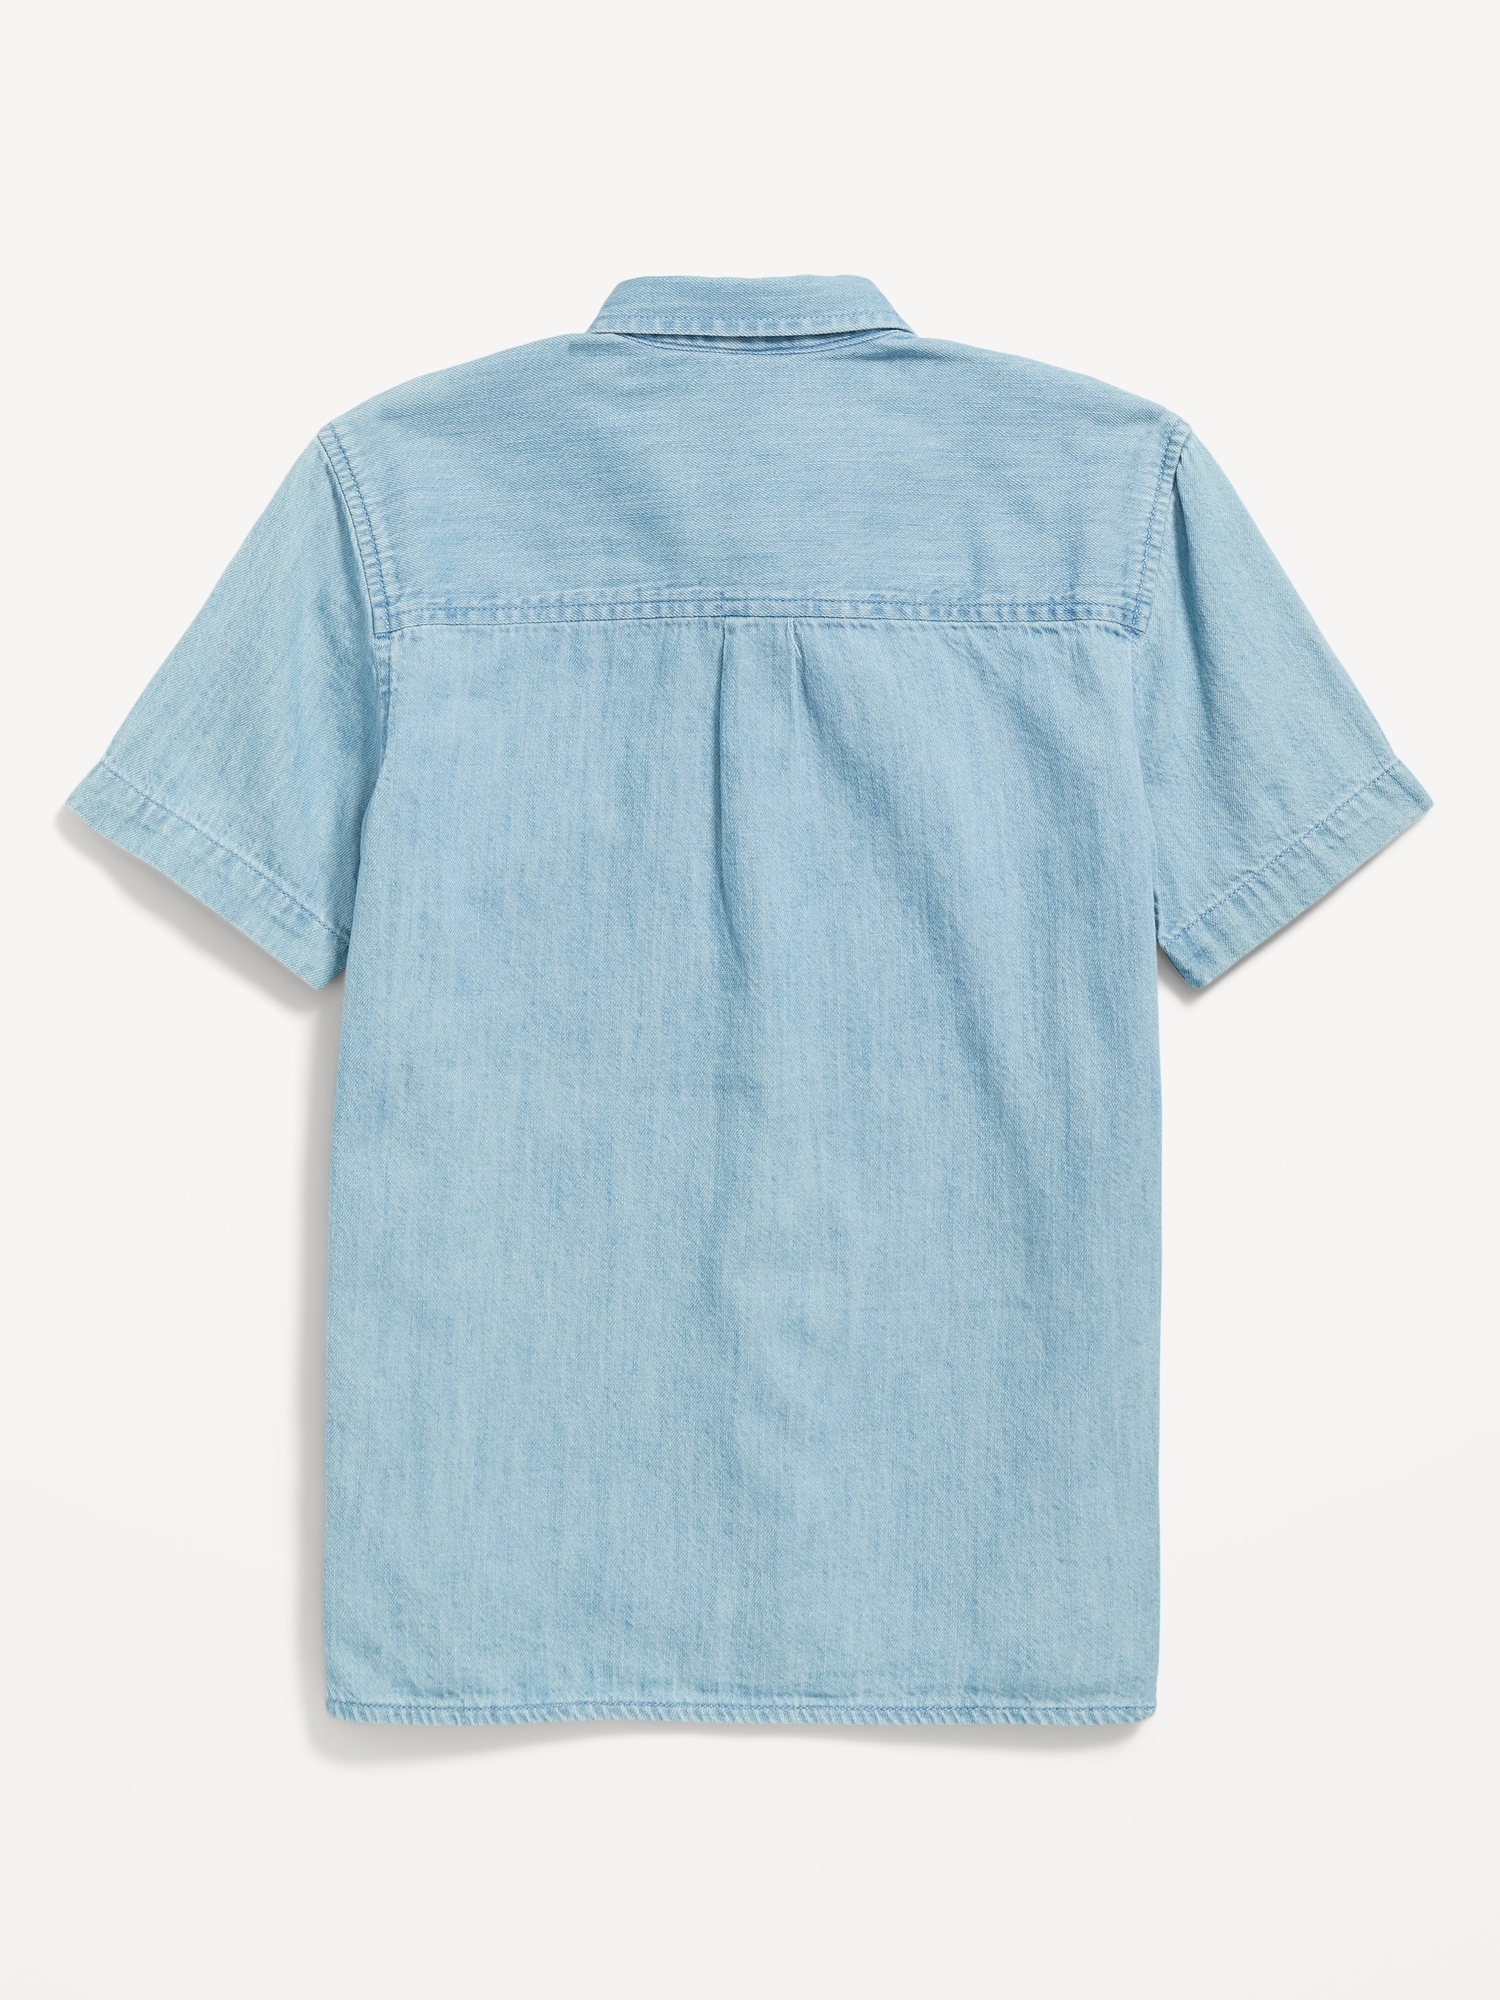 Blue Cremlin Half Sleeves Kids Denim Shirt at Rs 298/piece in New Delhi |  ID: 2852117249455